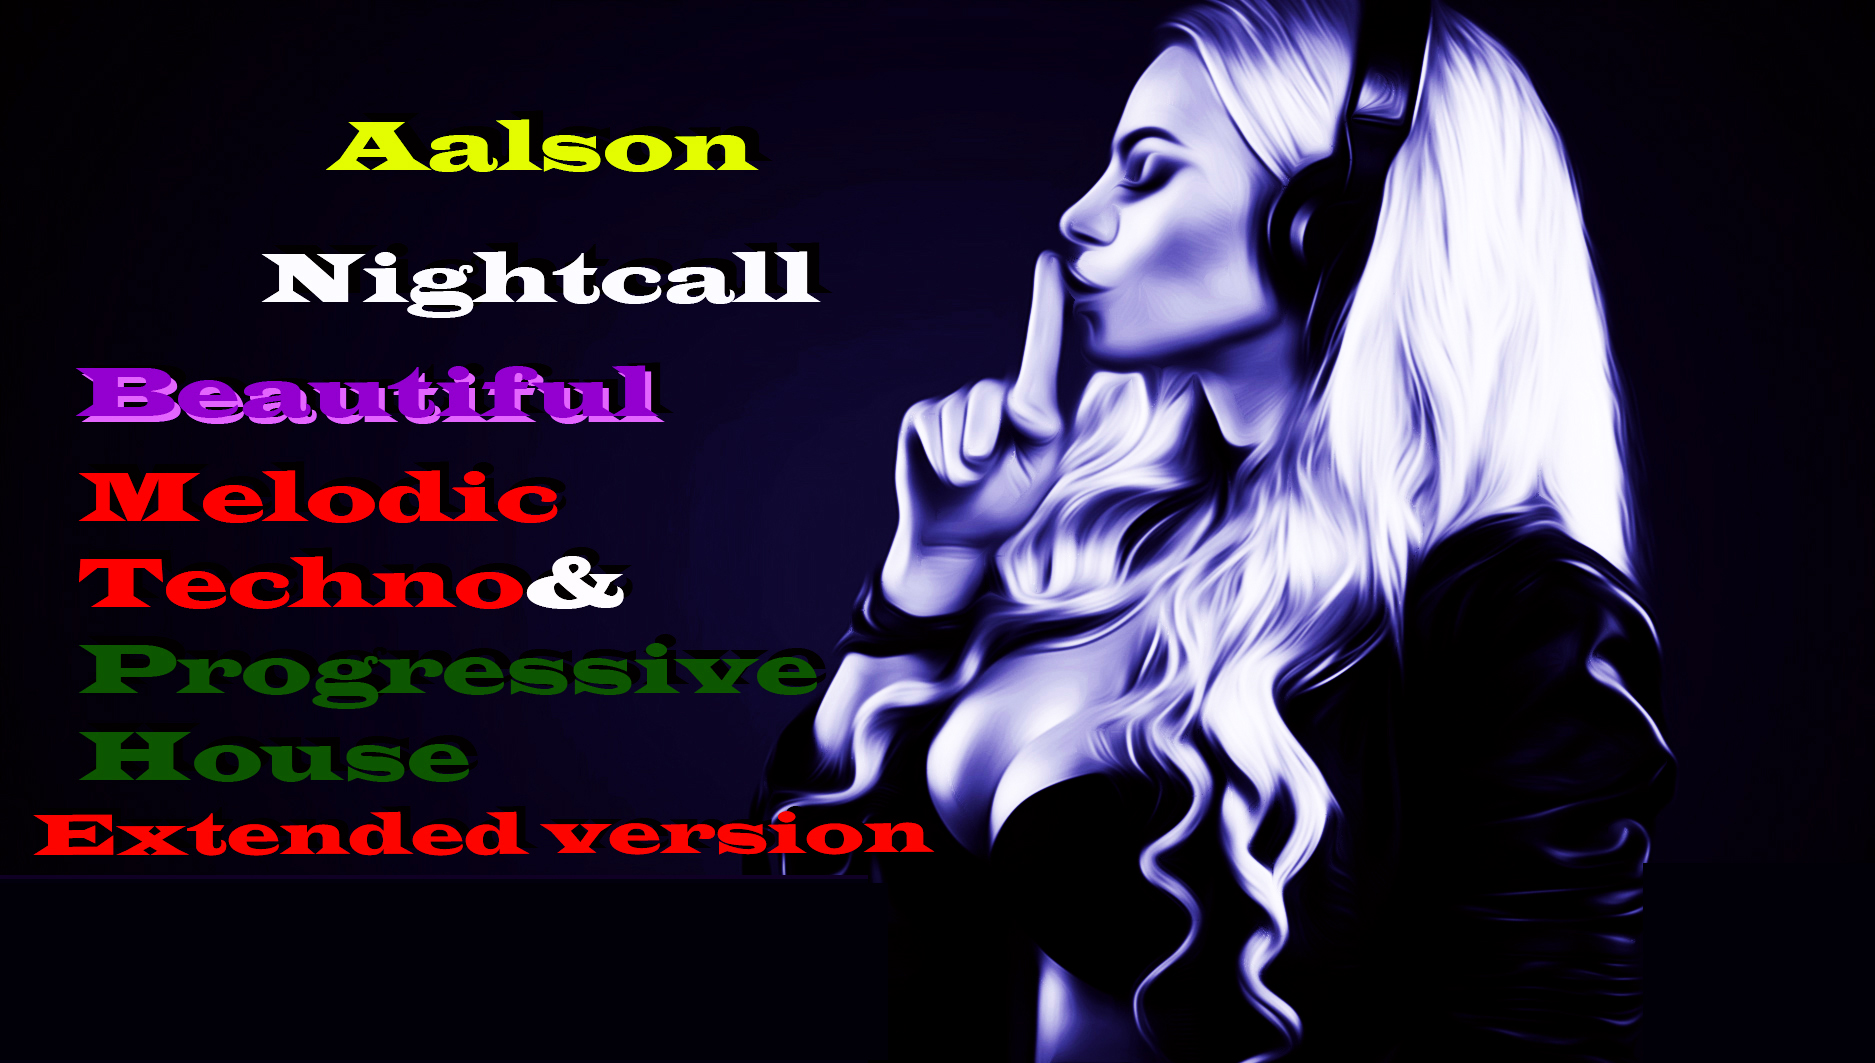 Aalson-Nightcall (Melodic Techno,Progressive House,Melodic House,Extended Version)Мелодик Техно .mp4